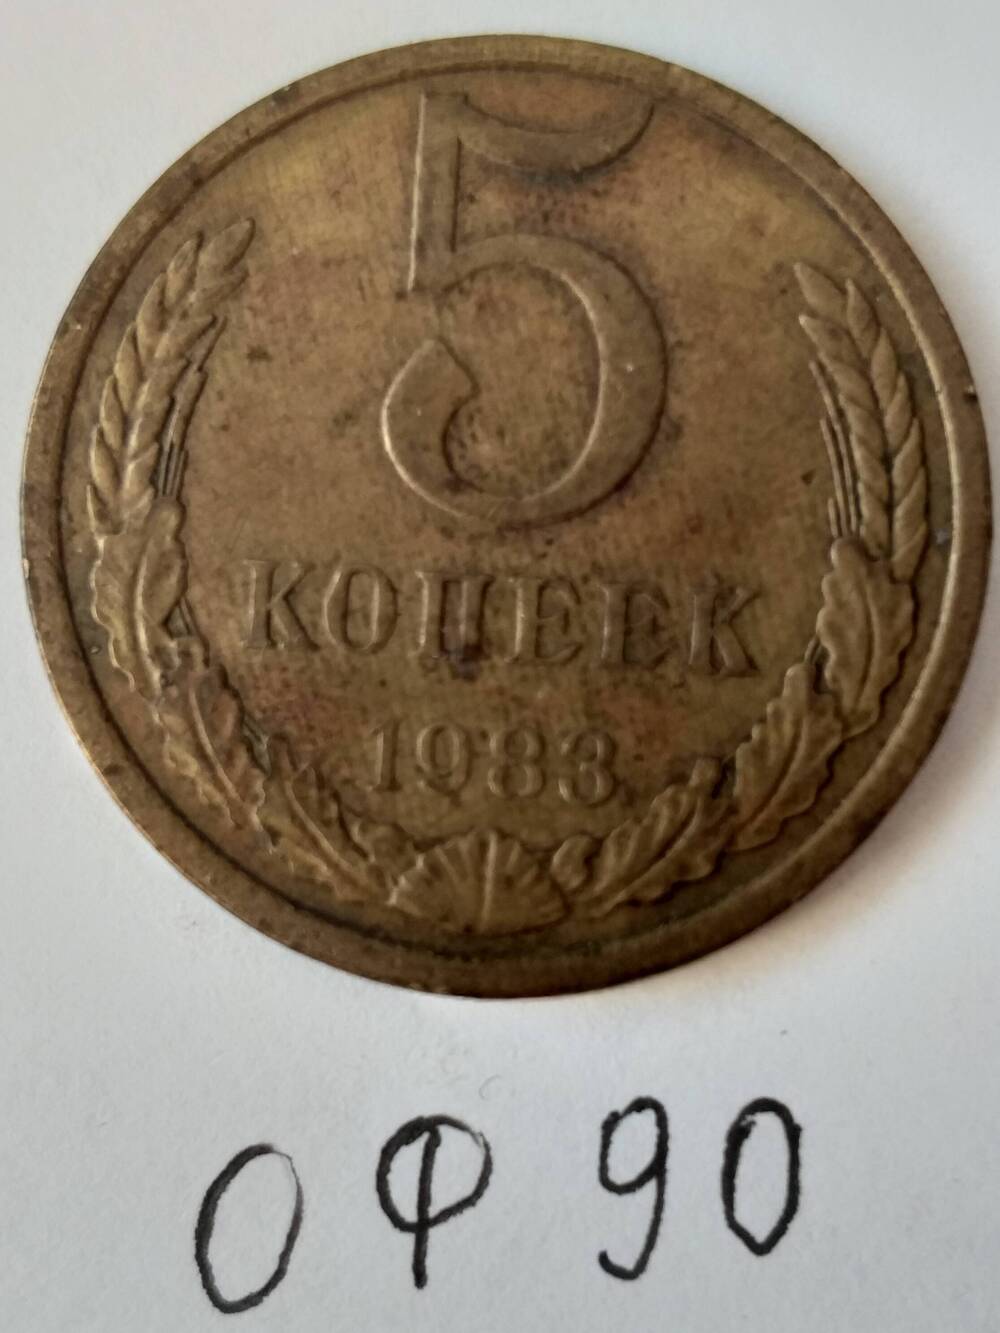 Монета 5 копеек 1983 года